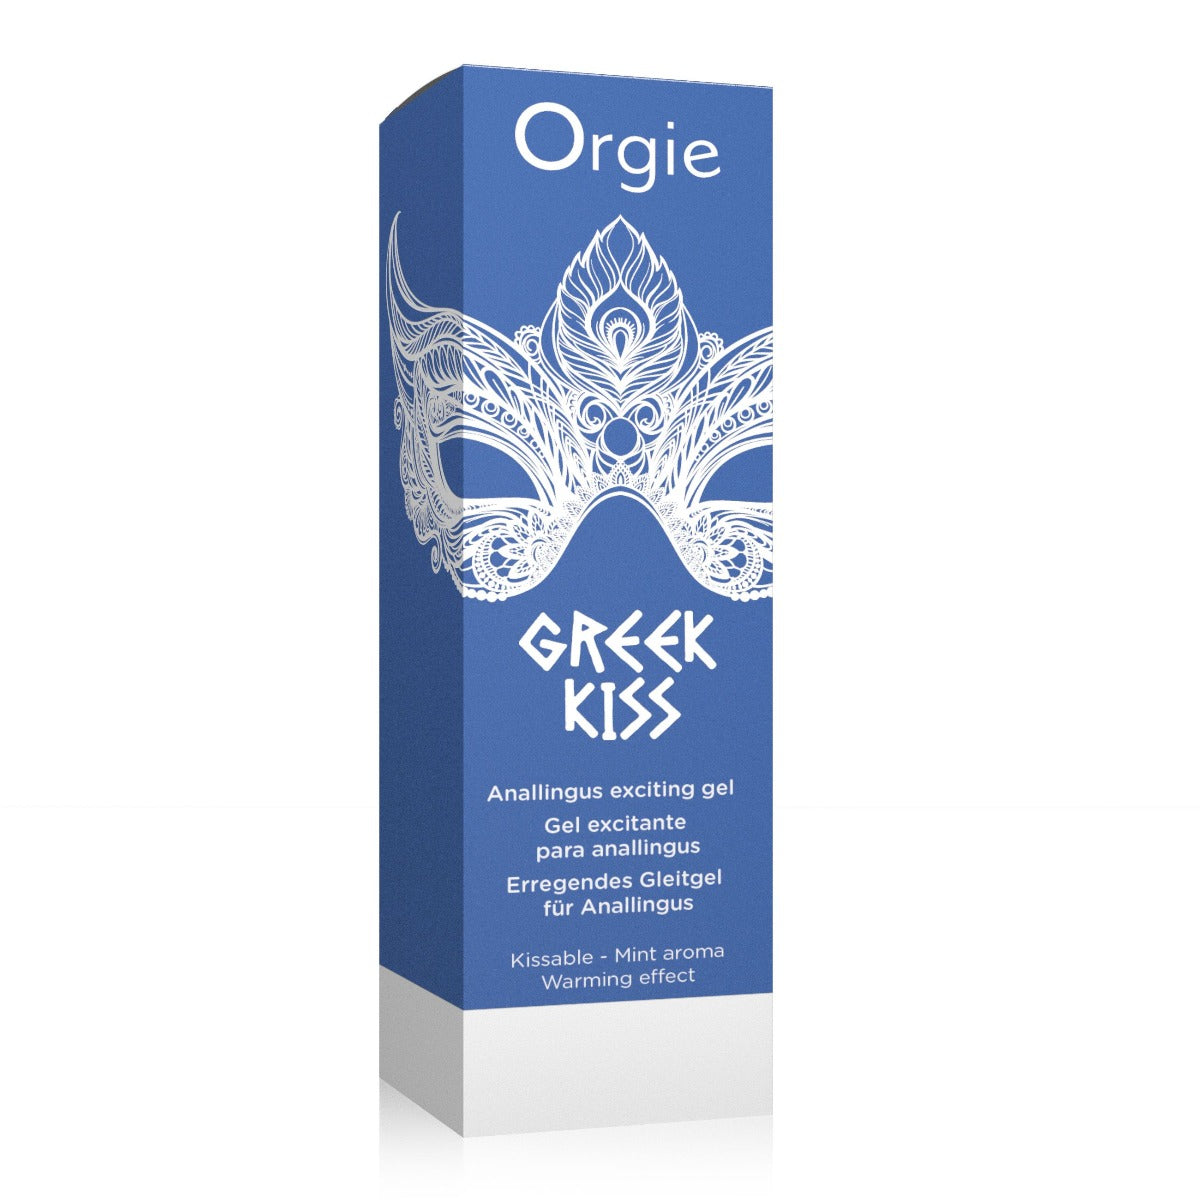 Orgie Greek Kiss - Annallingus Exciting and Kissable Gel - UABDSM